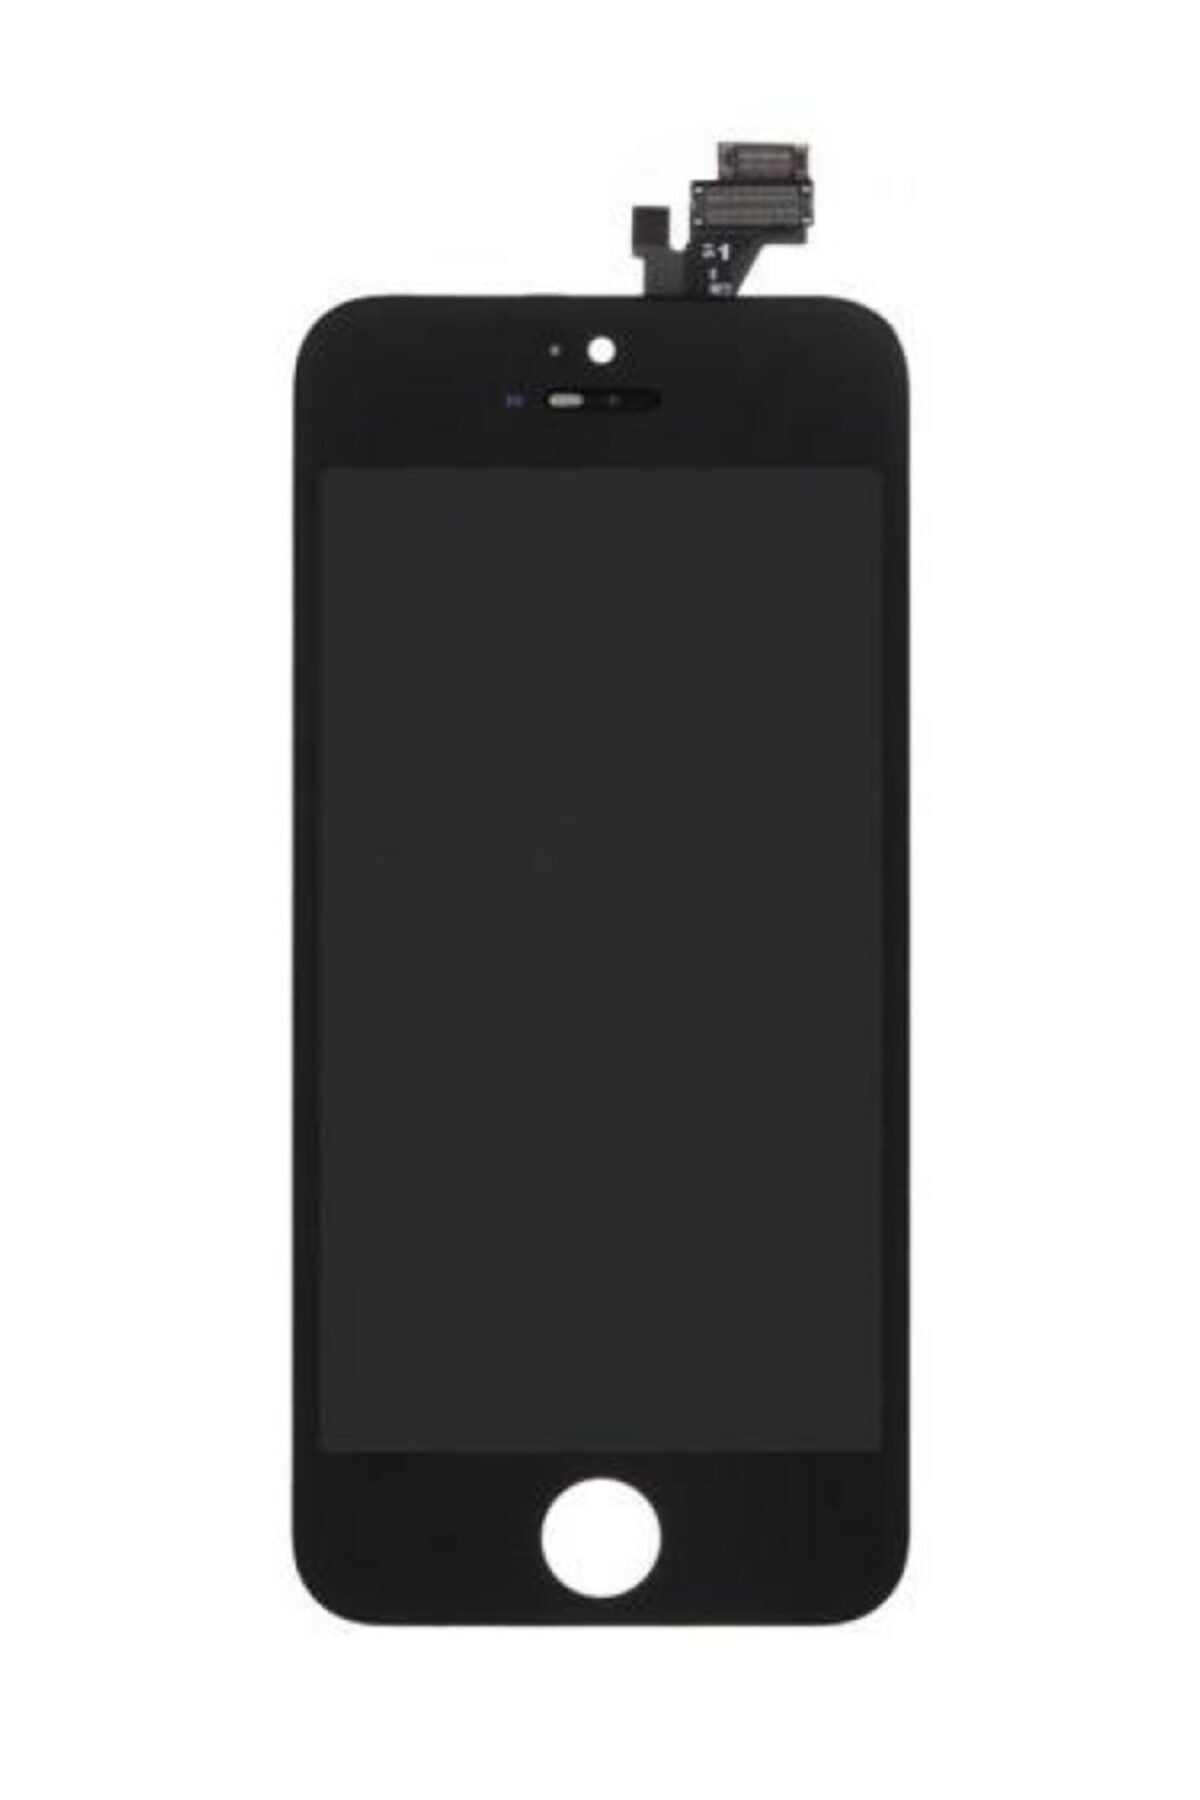 Maf Aksesuar Iphone 5g Dokunmatik Ve Lcd Ekran Touch